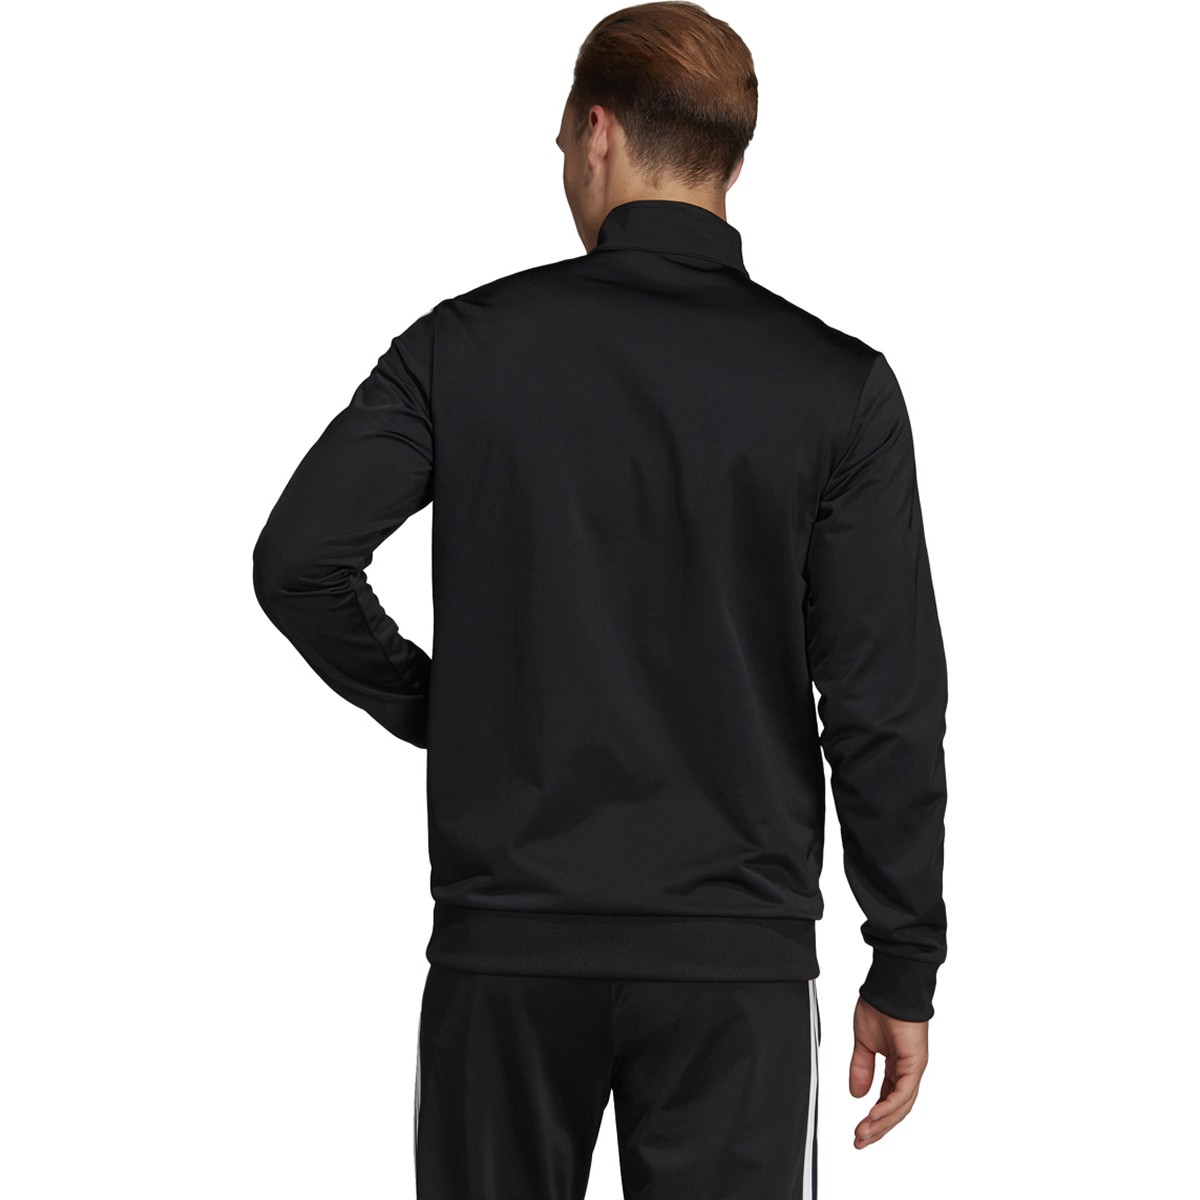 Adidas Essentials 3 Stripe Men's Track Jacket DQ3070 - Black, White - image 5 of 8